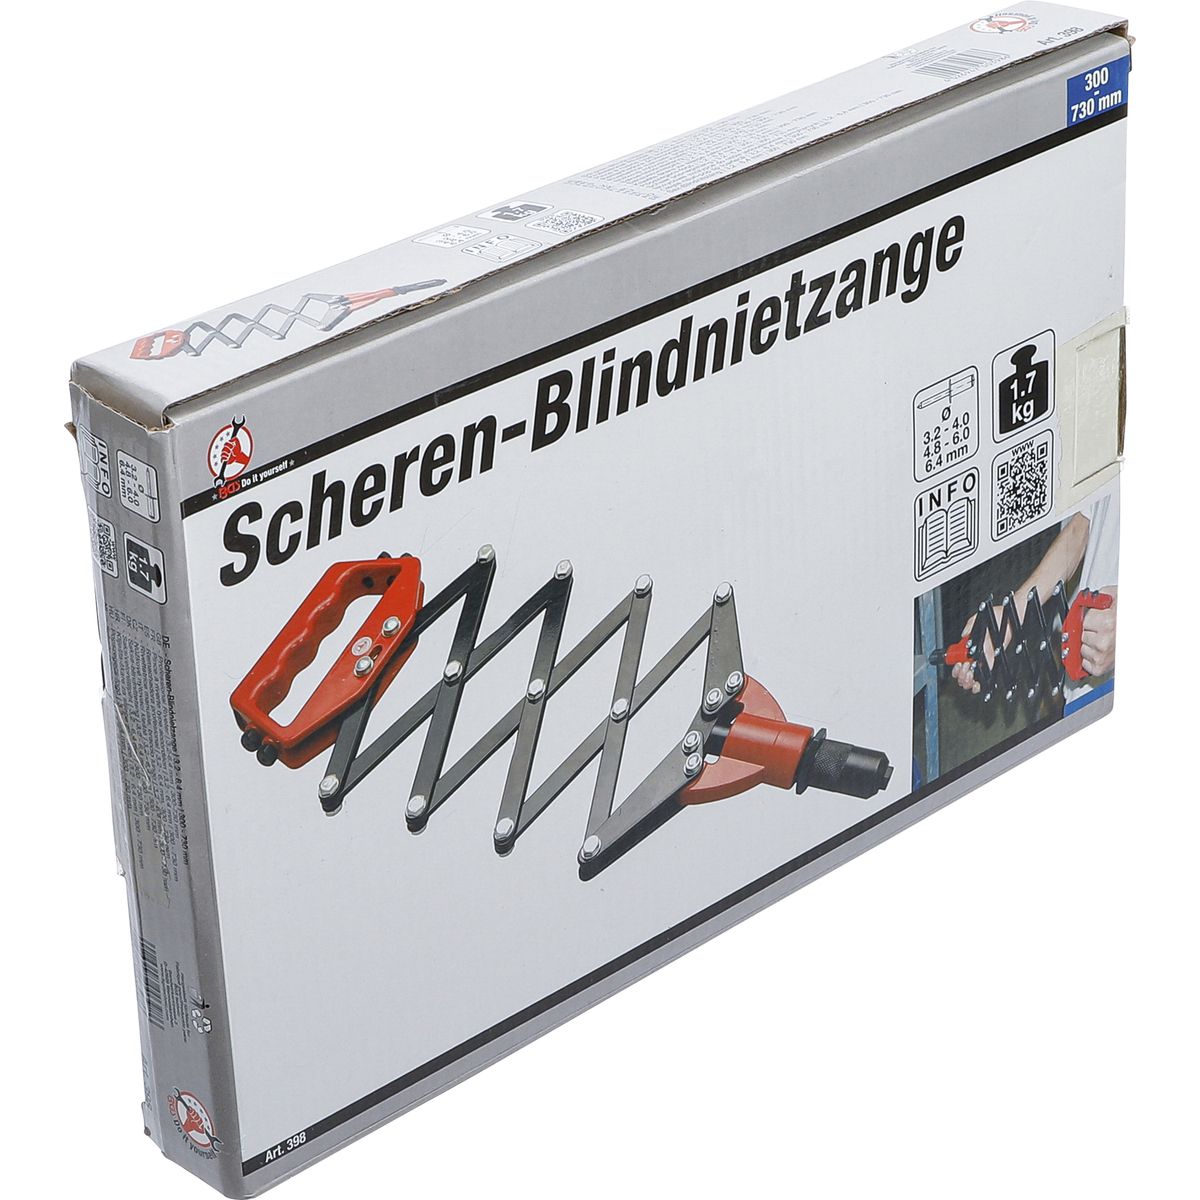 Scheren-Blindnietzange | 3,2 - 6,4 mm | 300 - 730 mm